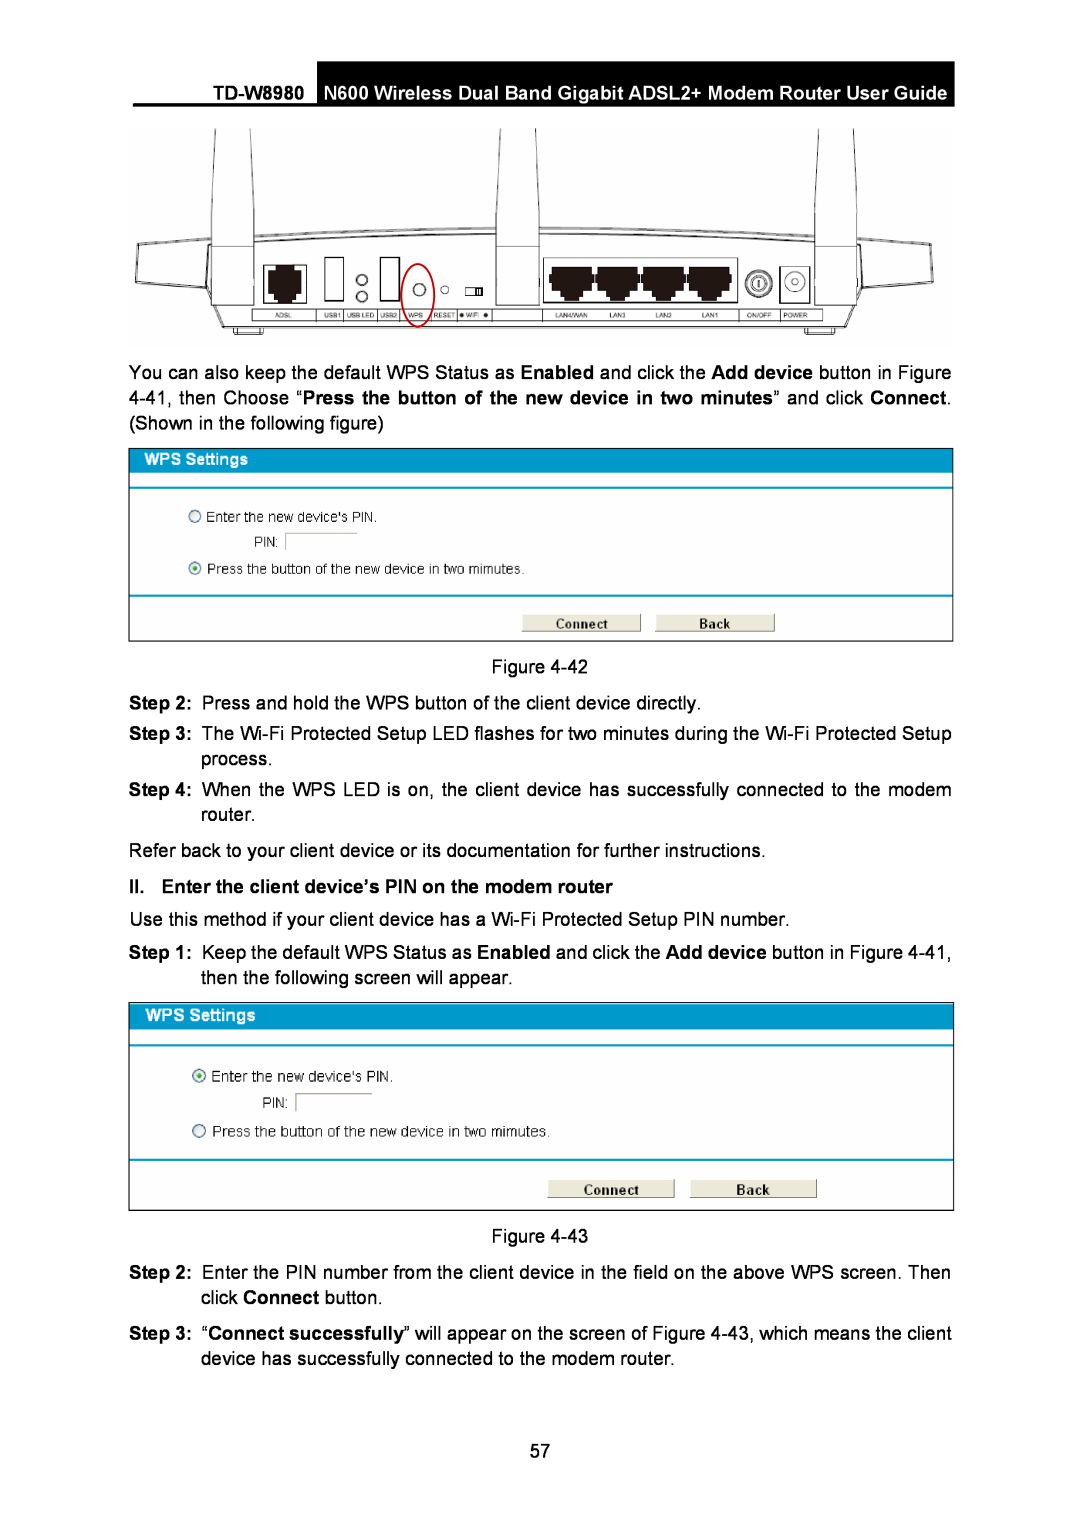 TP-Link TD-W8980 manual N600 Wireless Dual Band Gigabit ADSL2+ Modem Router User Guide 